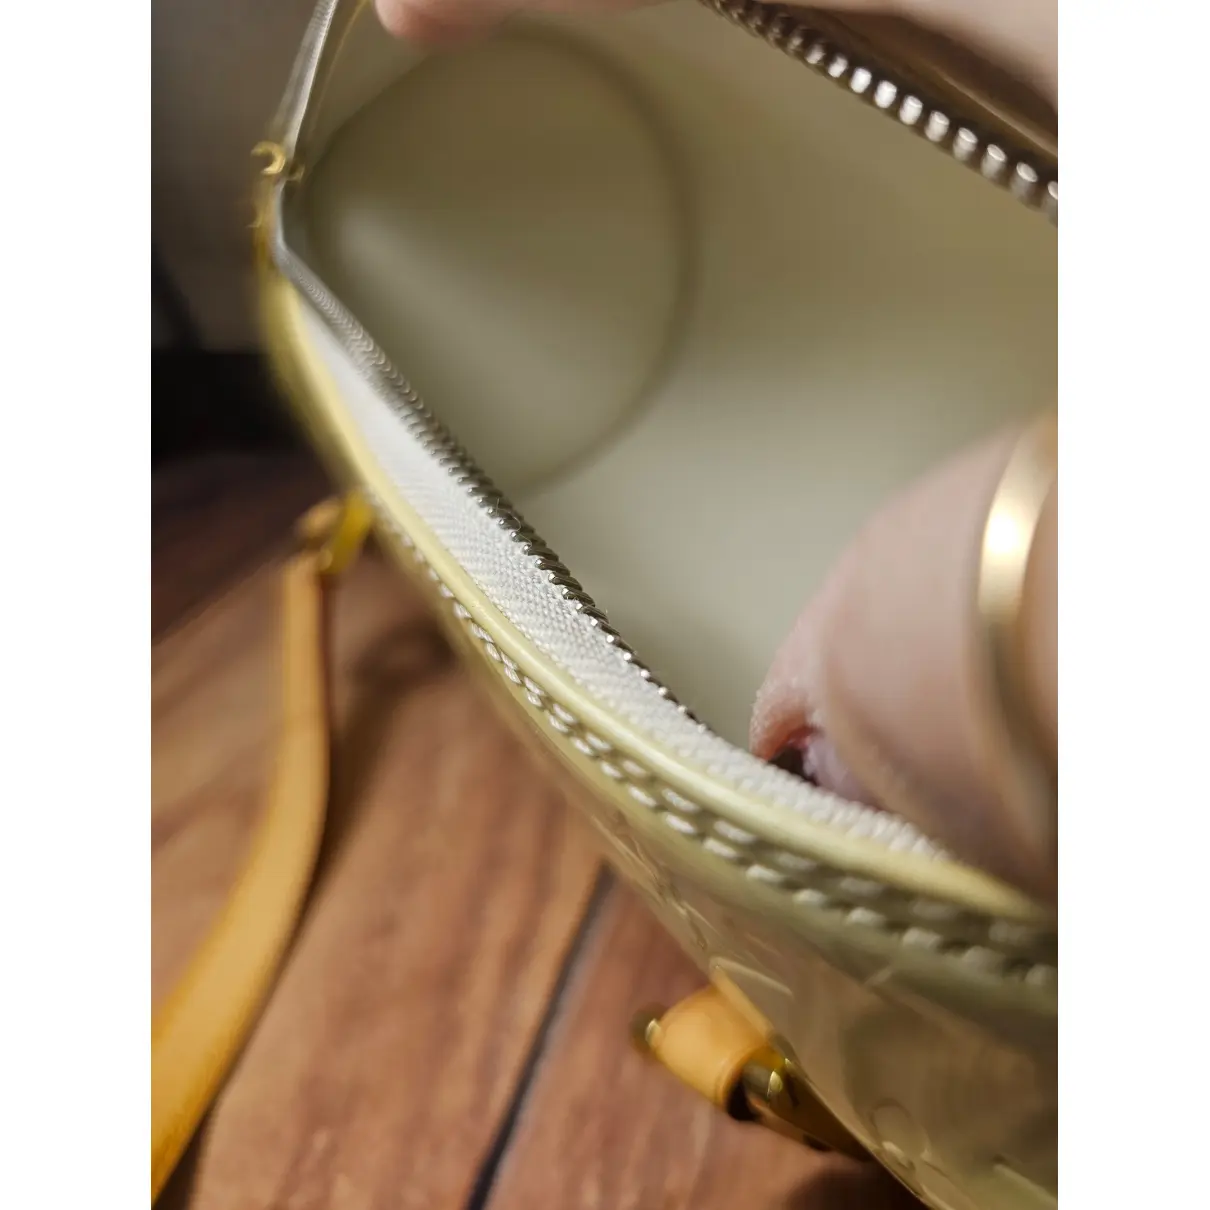 Bedford leather handbag Louis Vuitton